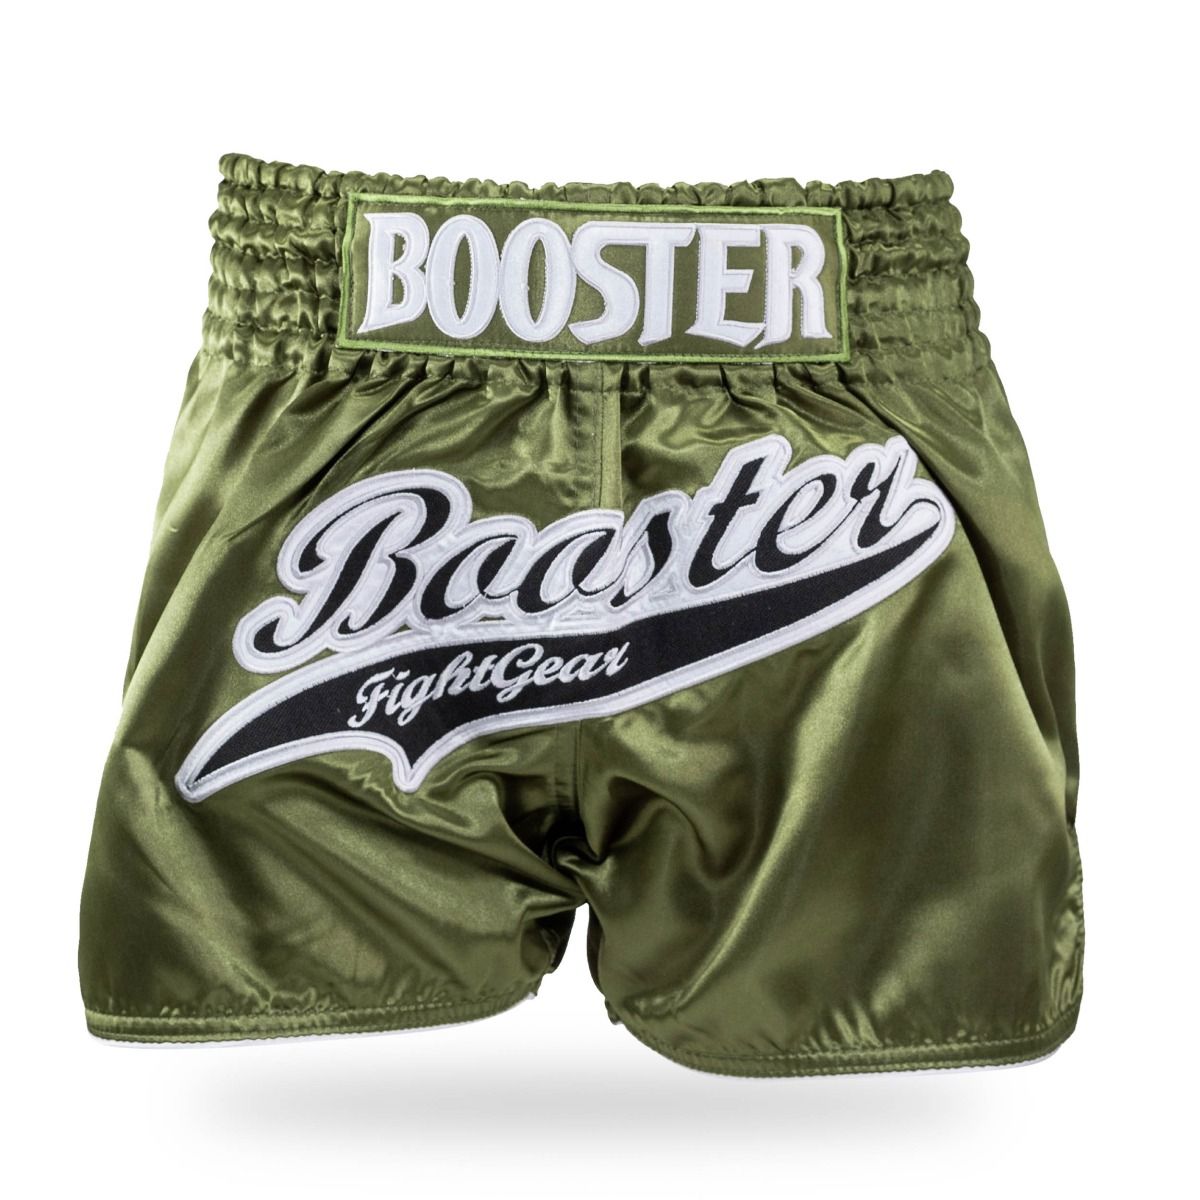 Booster Fightgear - fightshort - TBT SLUGGER - groen - licht groen